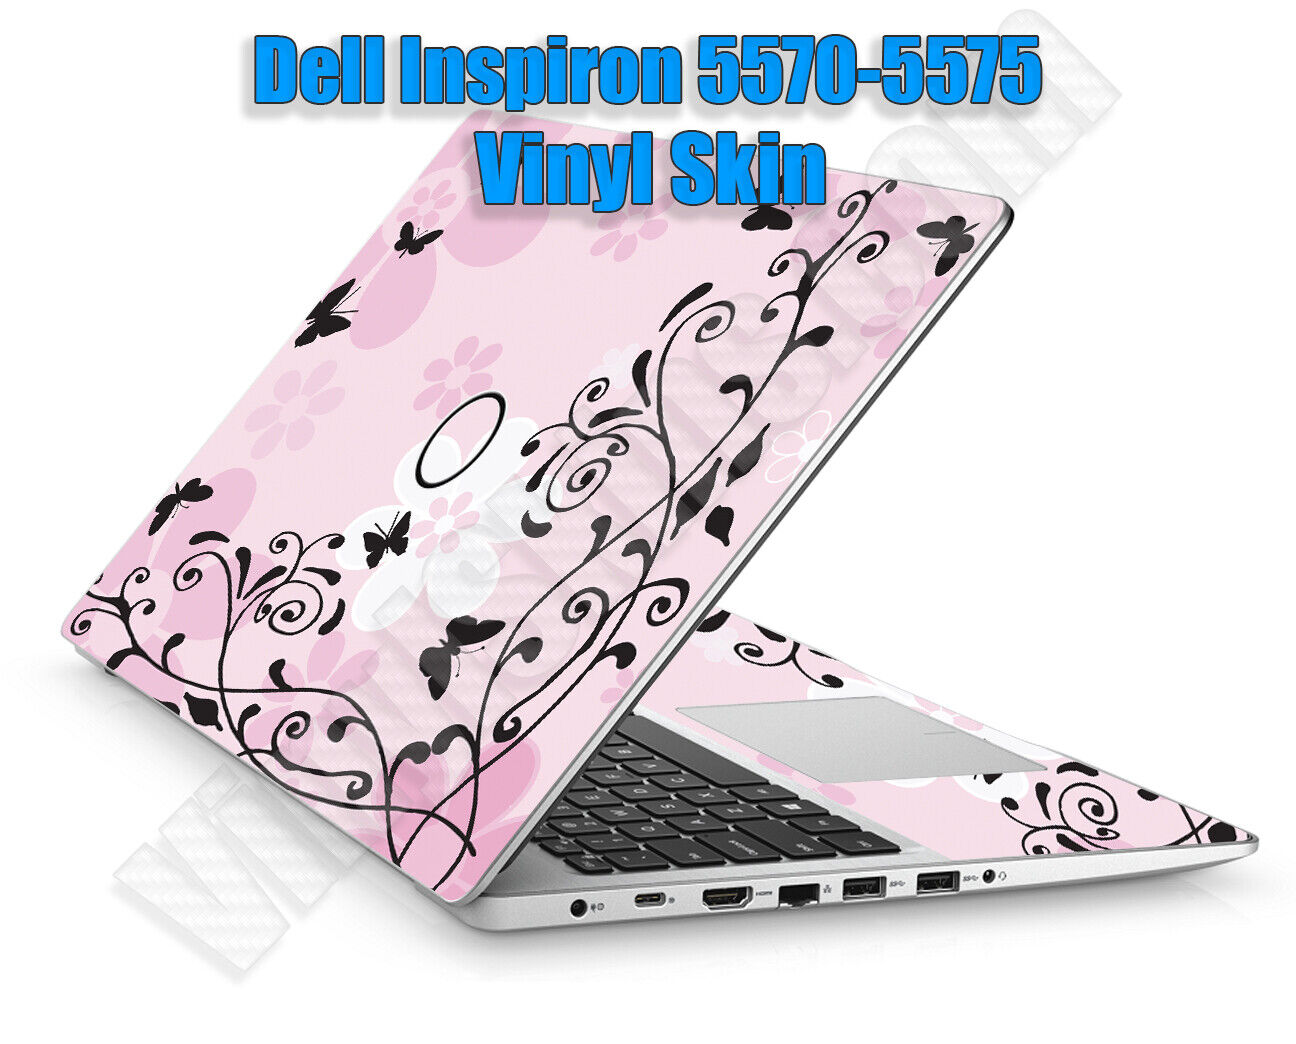 Any Custom Vinyl Skin / Decal Design for Dell Inspiron 5570-5575 - Free US Ship